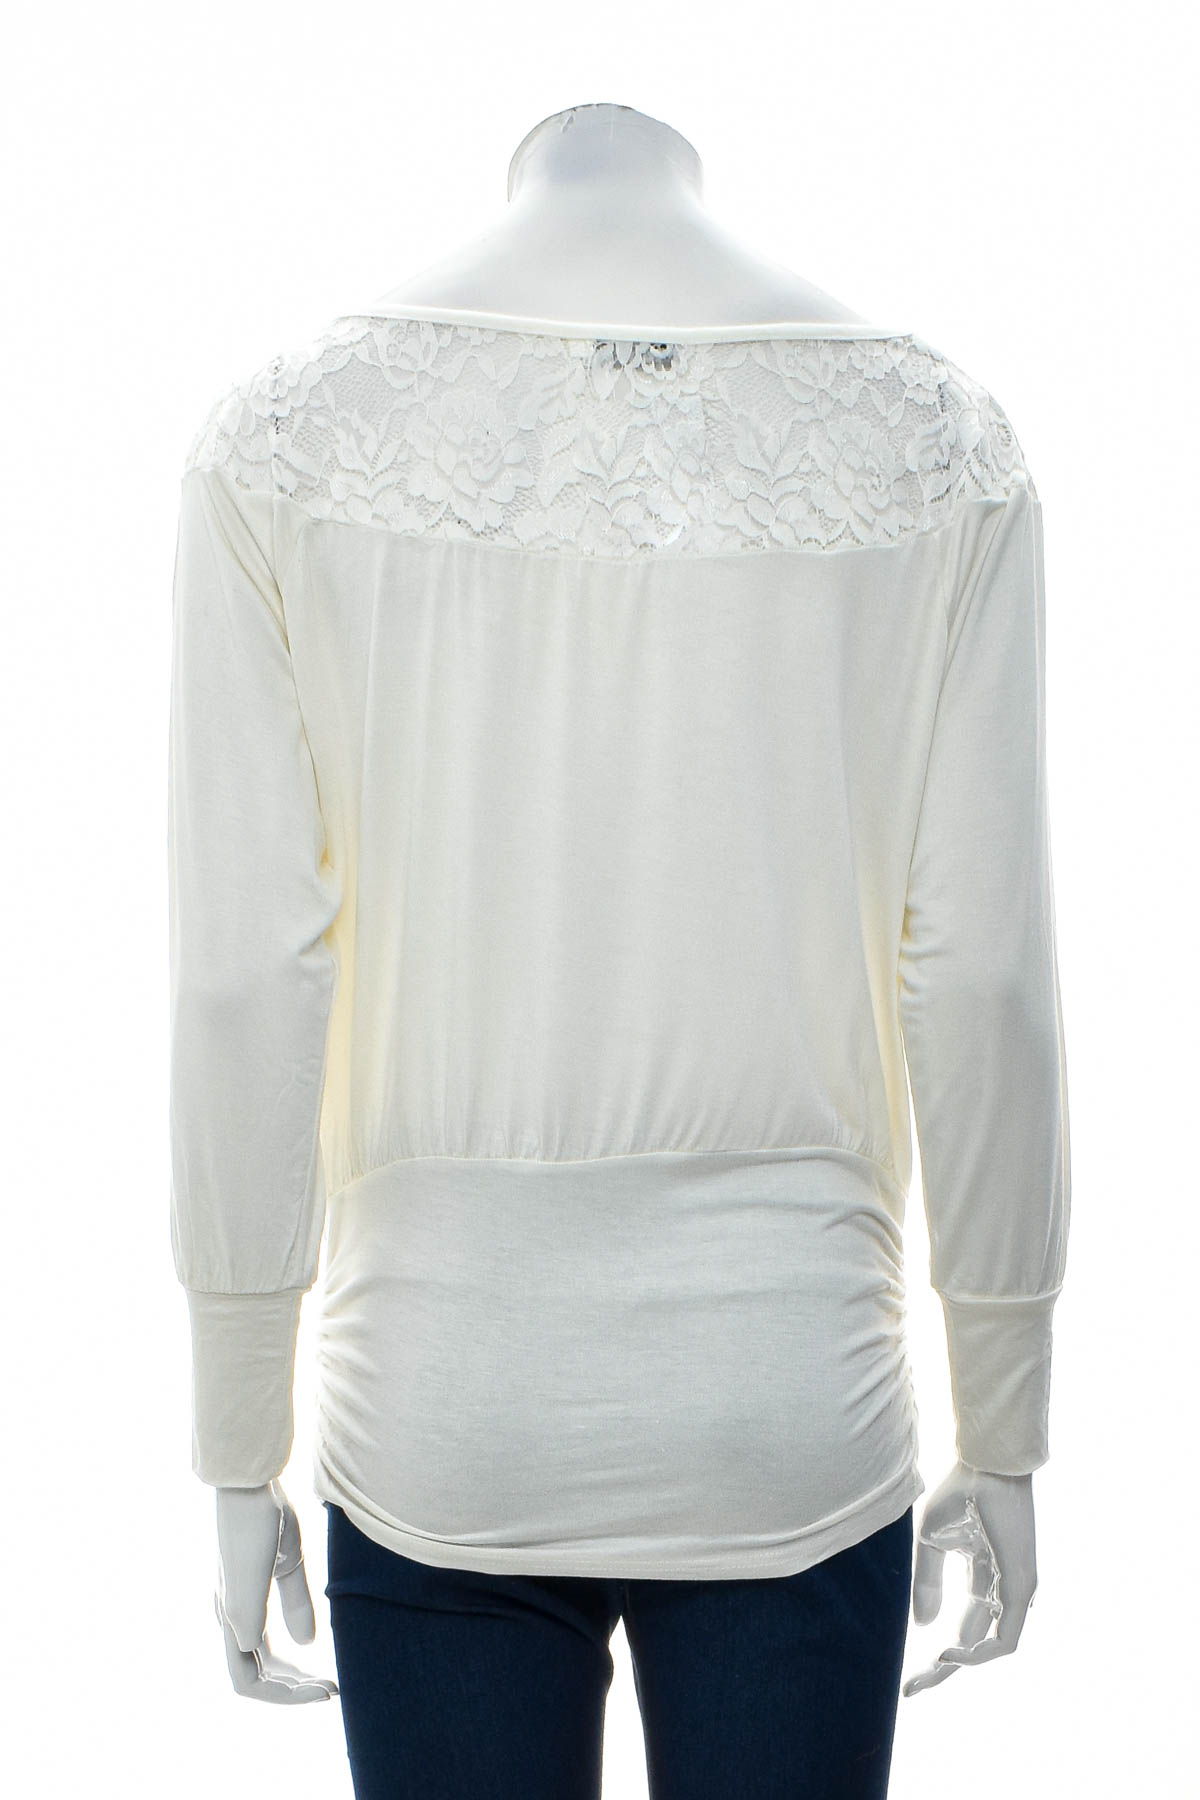 Women's blouse - Yidarton - 1